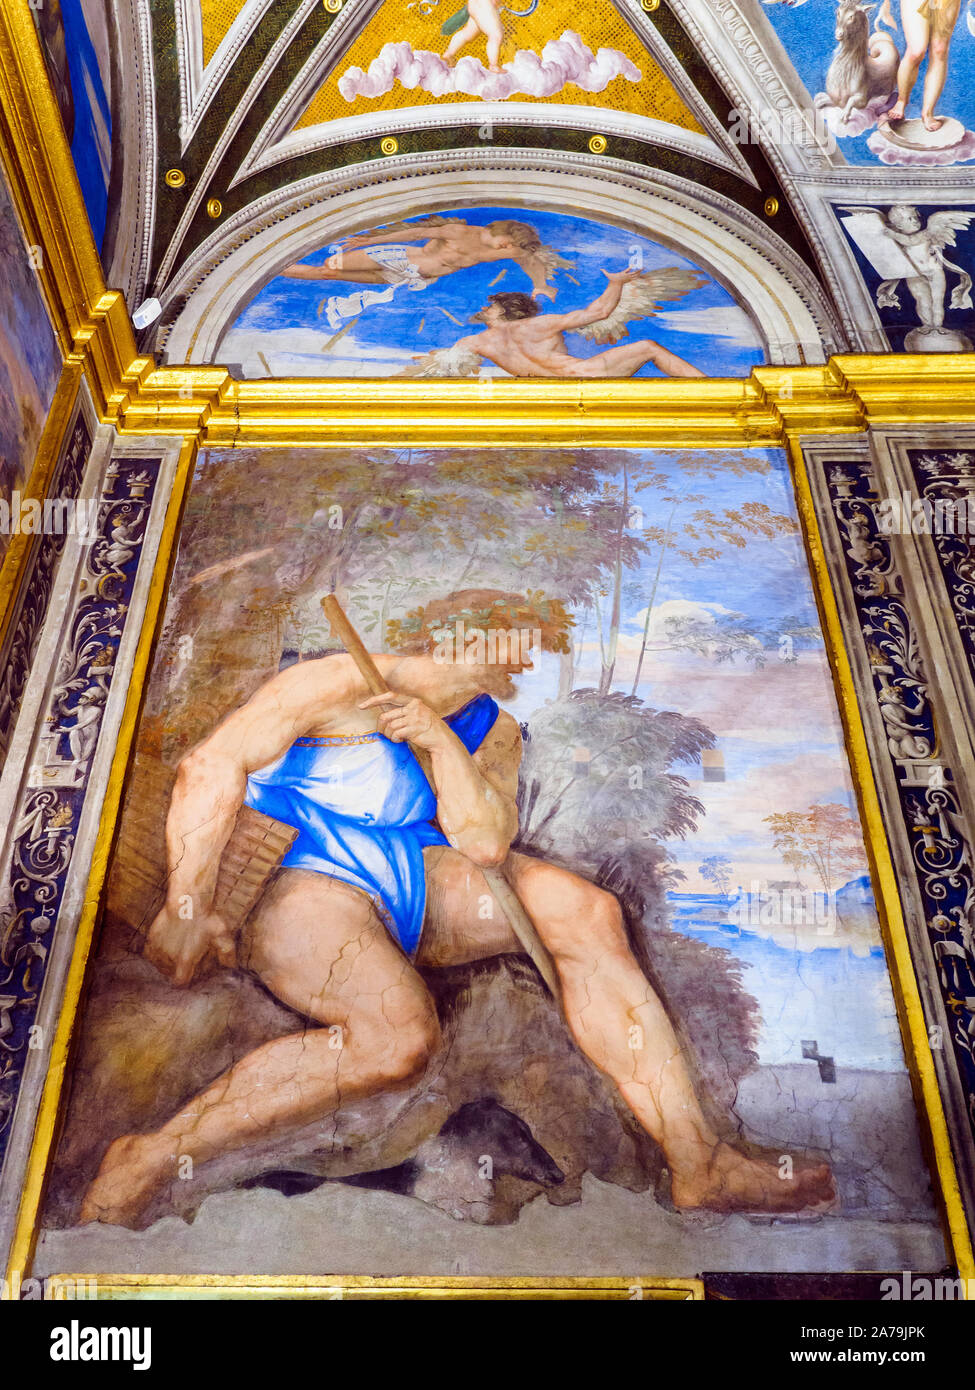 Das Fresko "Polifemo e le Lunette' (Polyphemus und den Stichkappen) von Sebastiano del Piombo in der Loggia von Galatea der Villa Farnesina - Rom, Italien Stockfoto